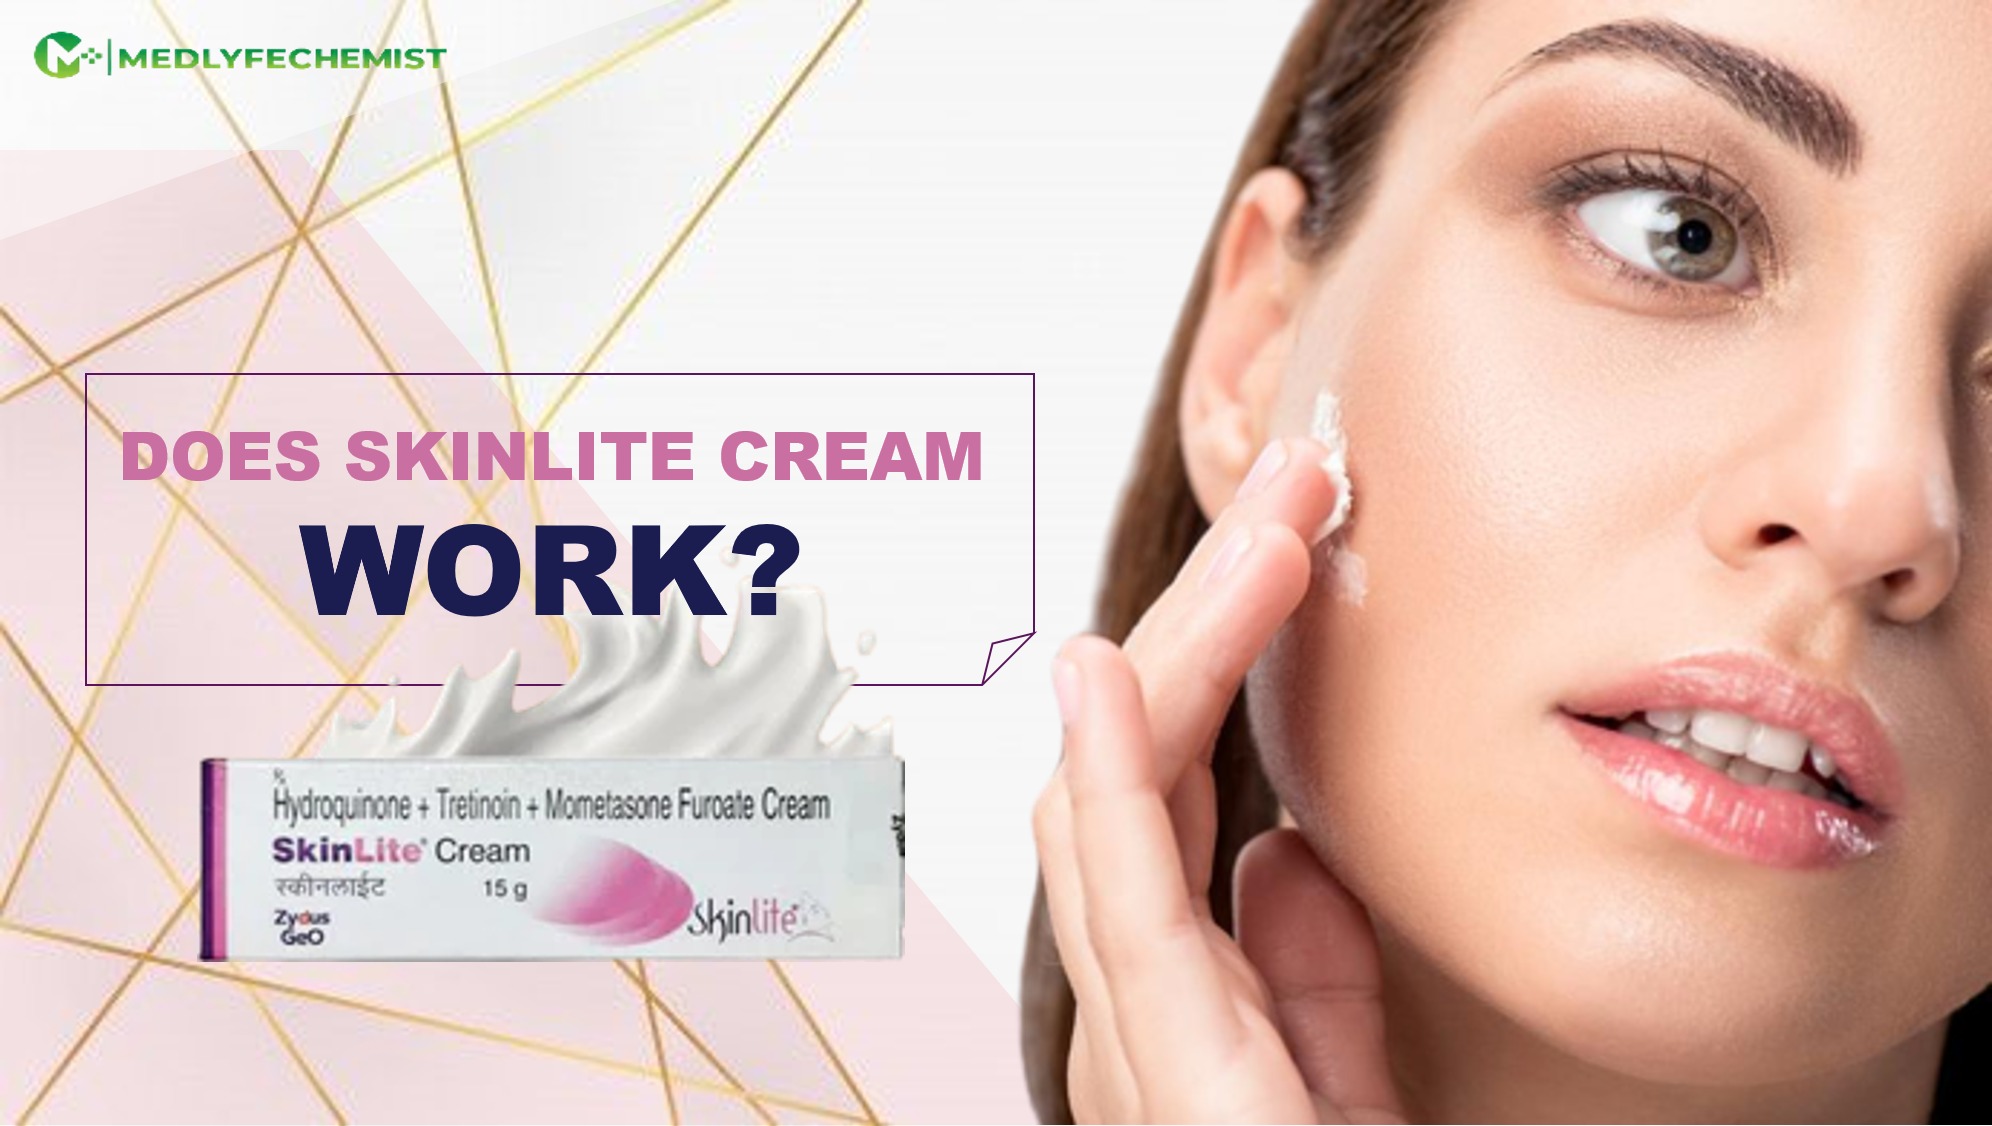 Does Skinlite cream work?